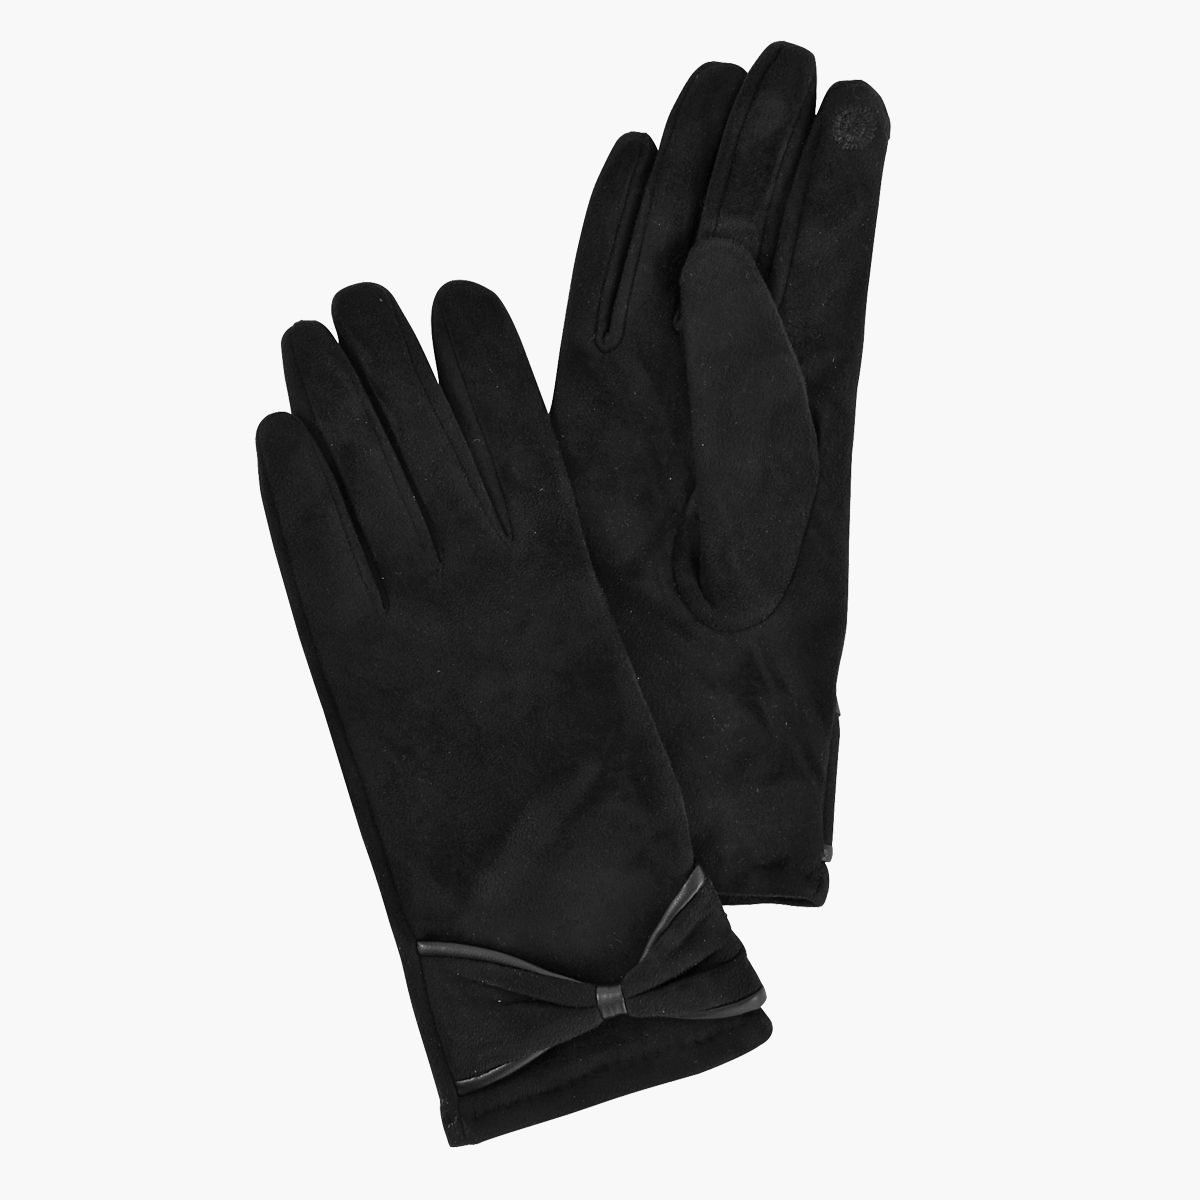 Gants waterproof pour poussette - black - Nobodinoz - la [kaban]